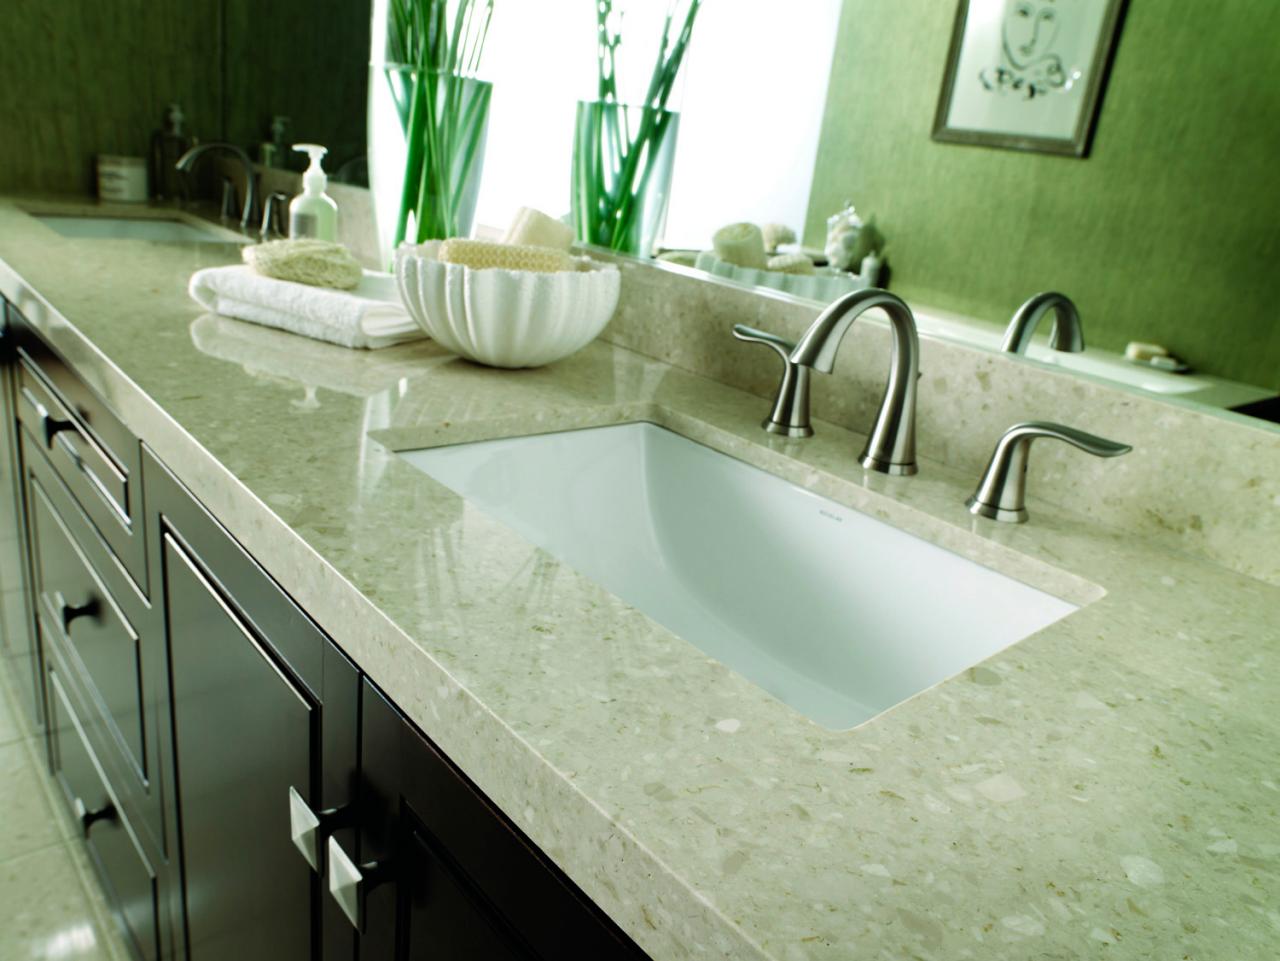 Choosing Bathroom Countertops, Which Is Better For Bathroom Countertops Quartz Or Granite